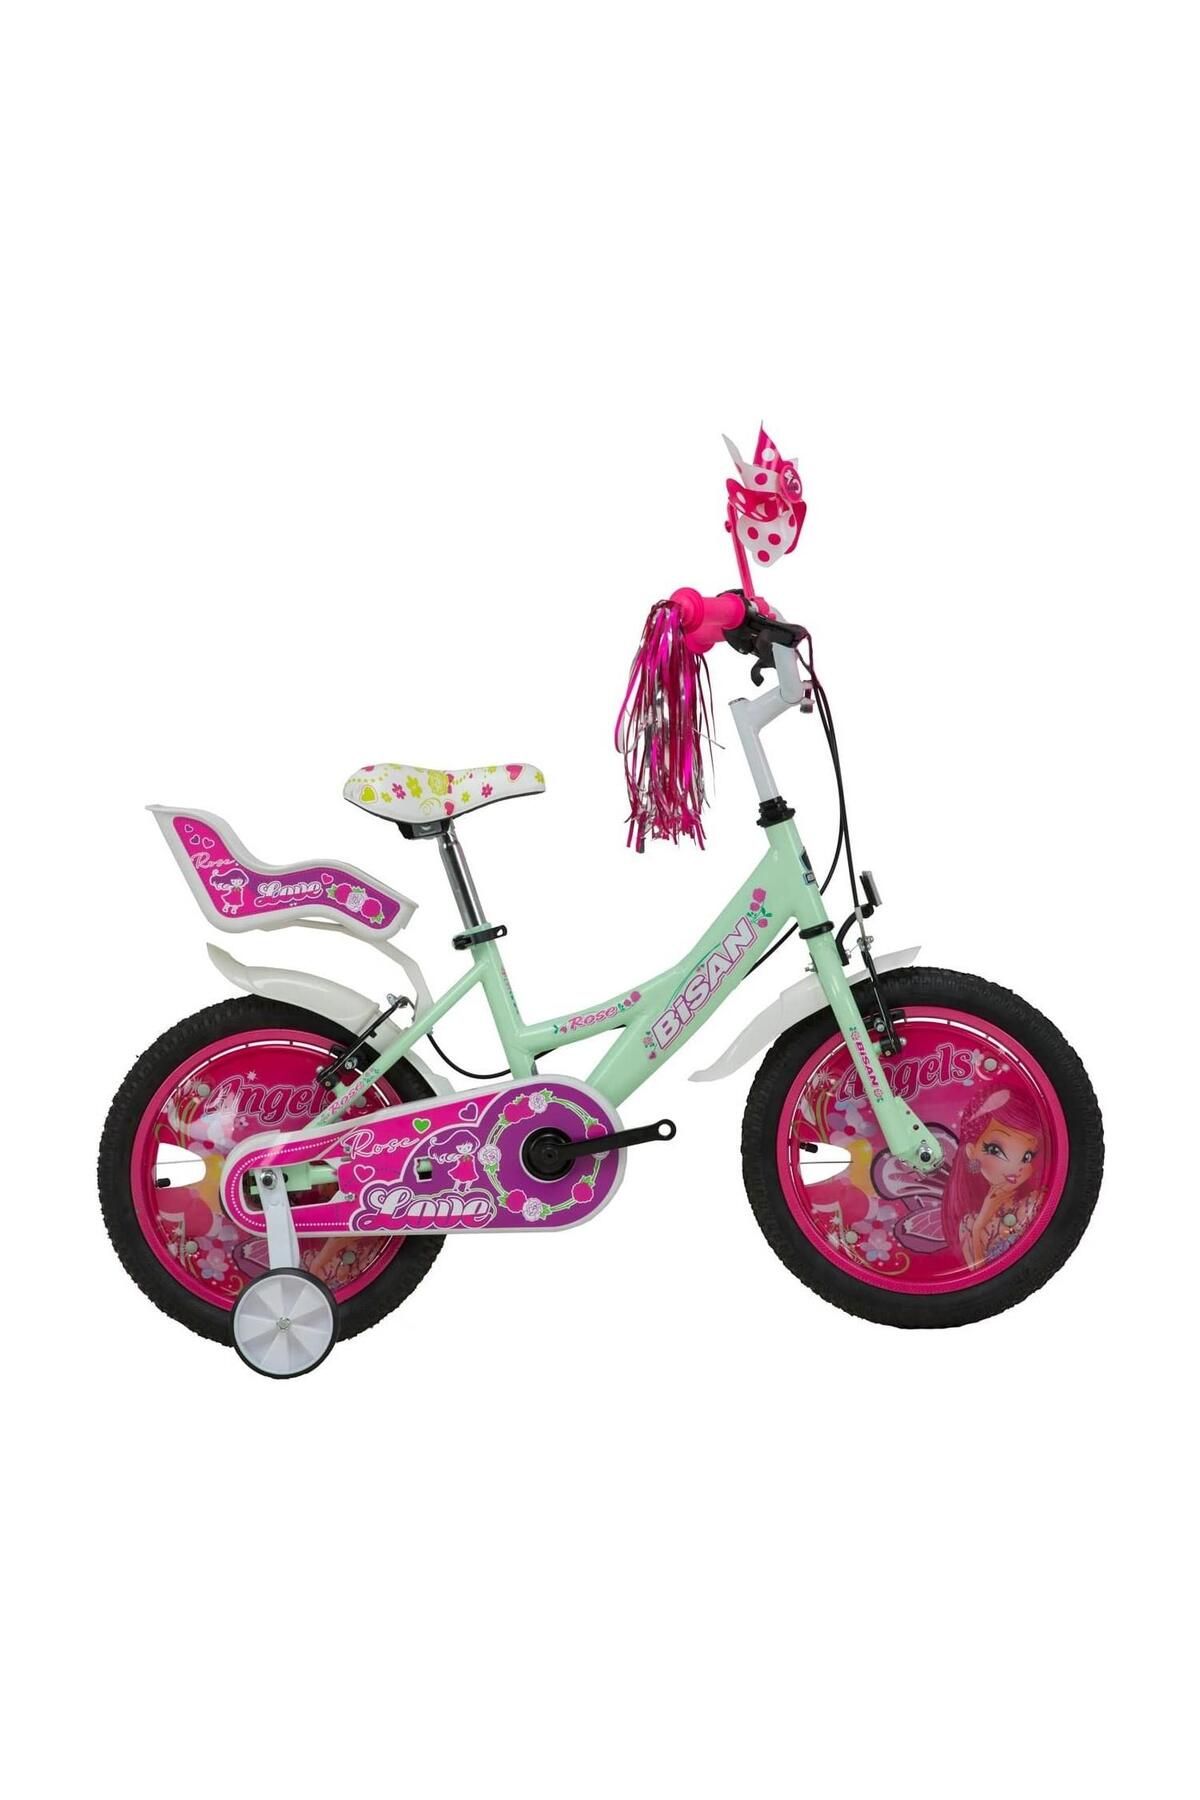 Bisan Rose Kız Çocuk Bisikleti 26CM V 16 Jant Mint Yeşil Pembe